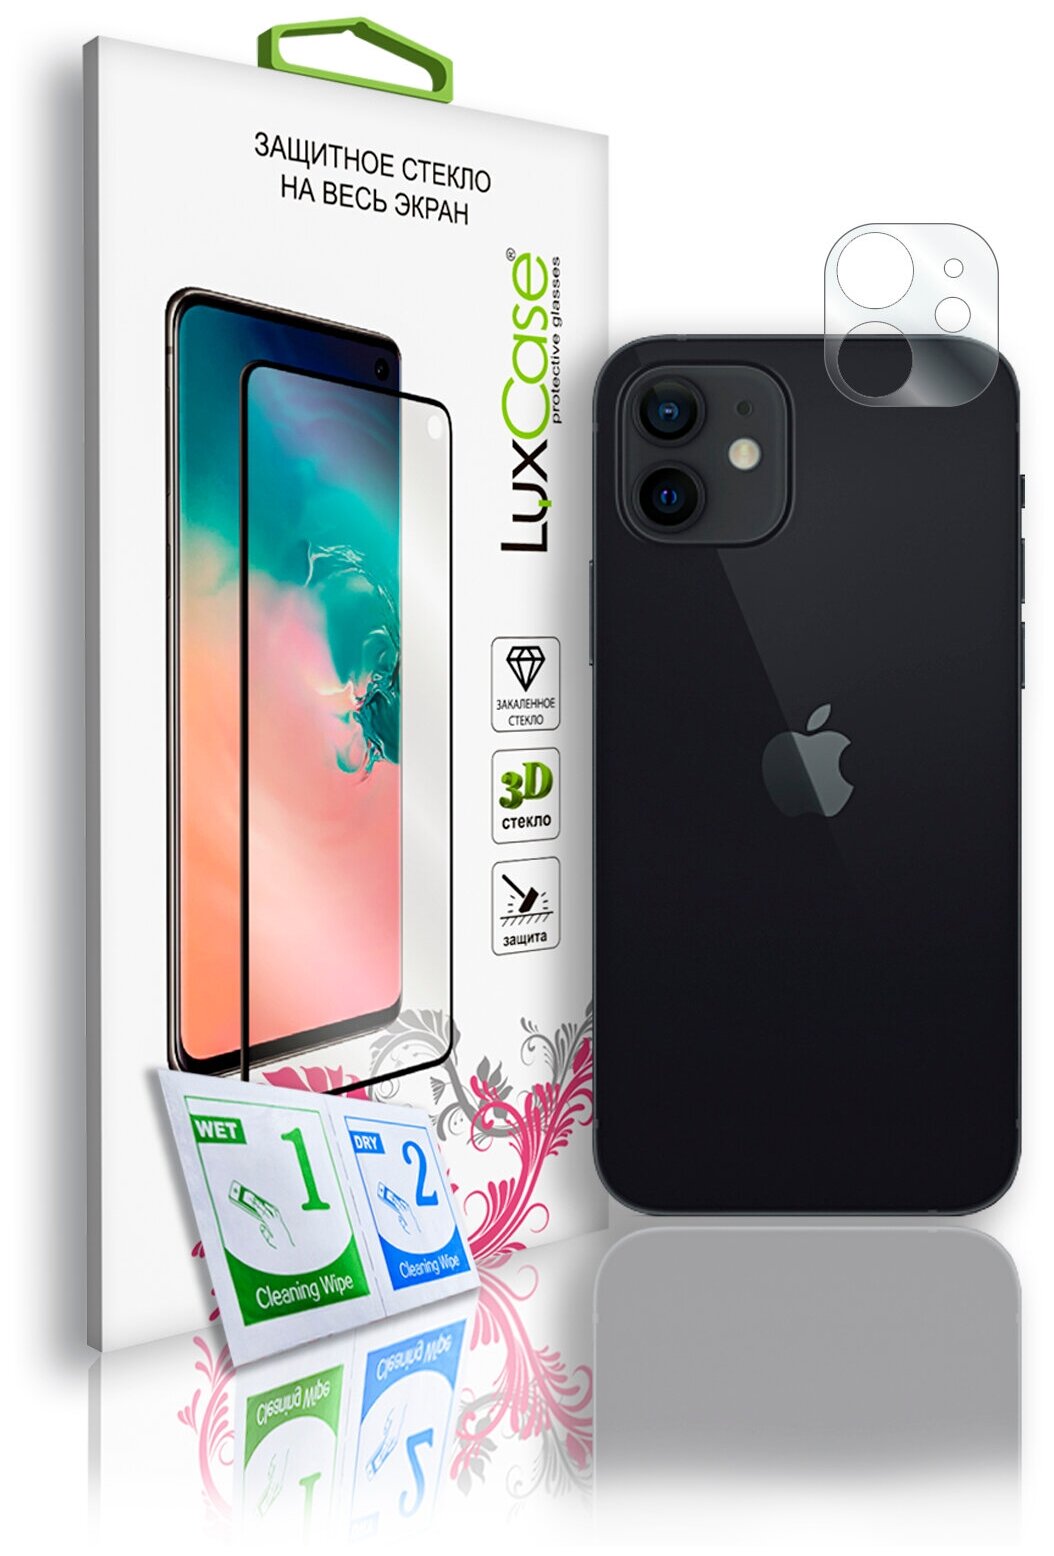 Стекло защитное 2.5D FG LuxCase для камеры для Apple iPhone 12 mini, Прозрачное, 0,33 мм, Прозрачная - фото №1